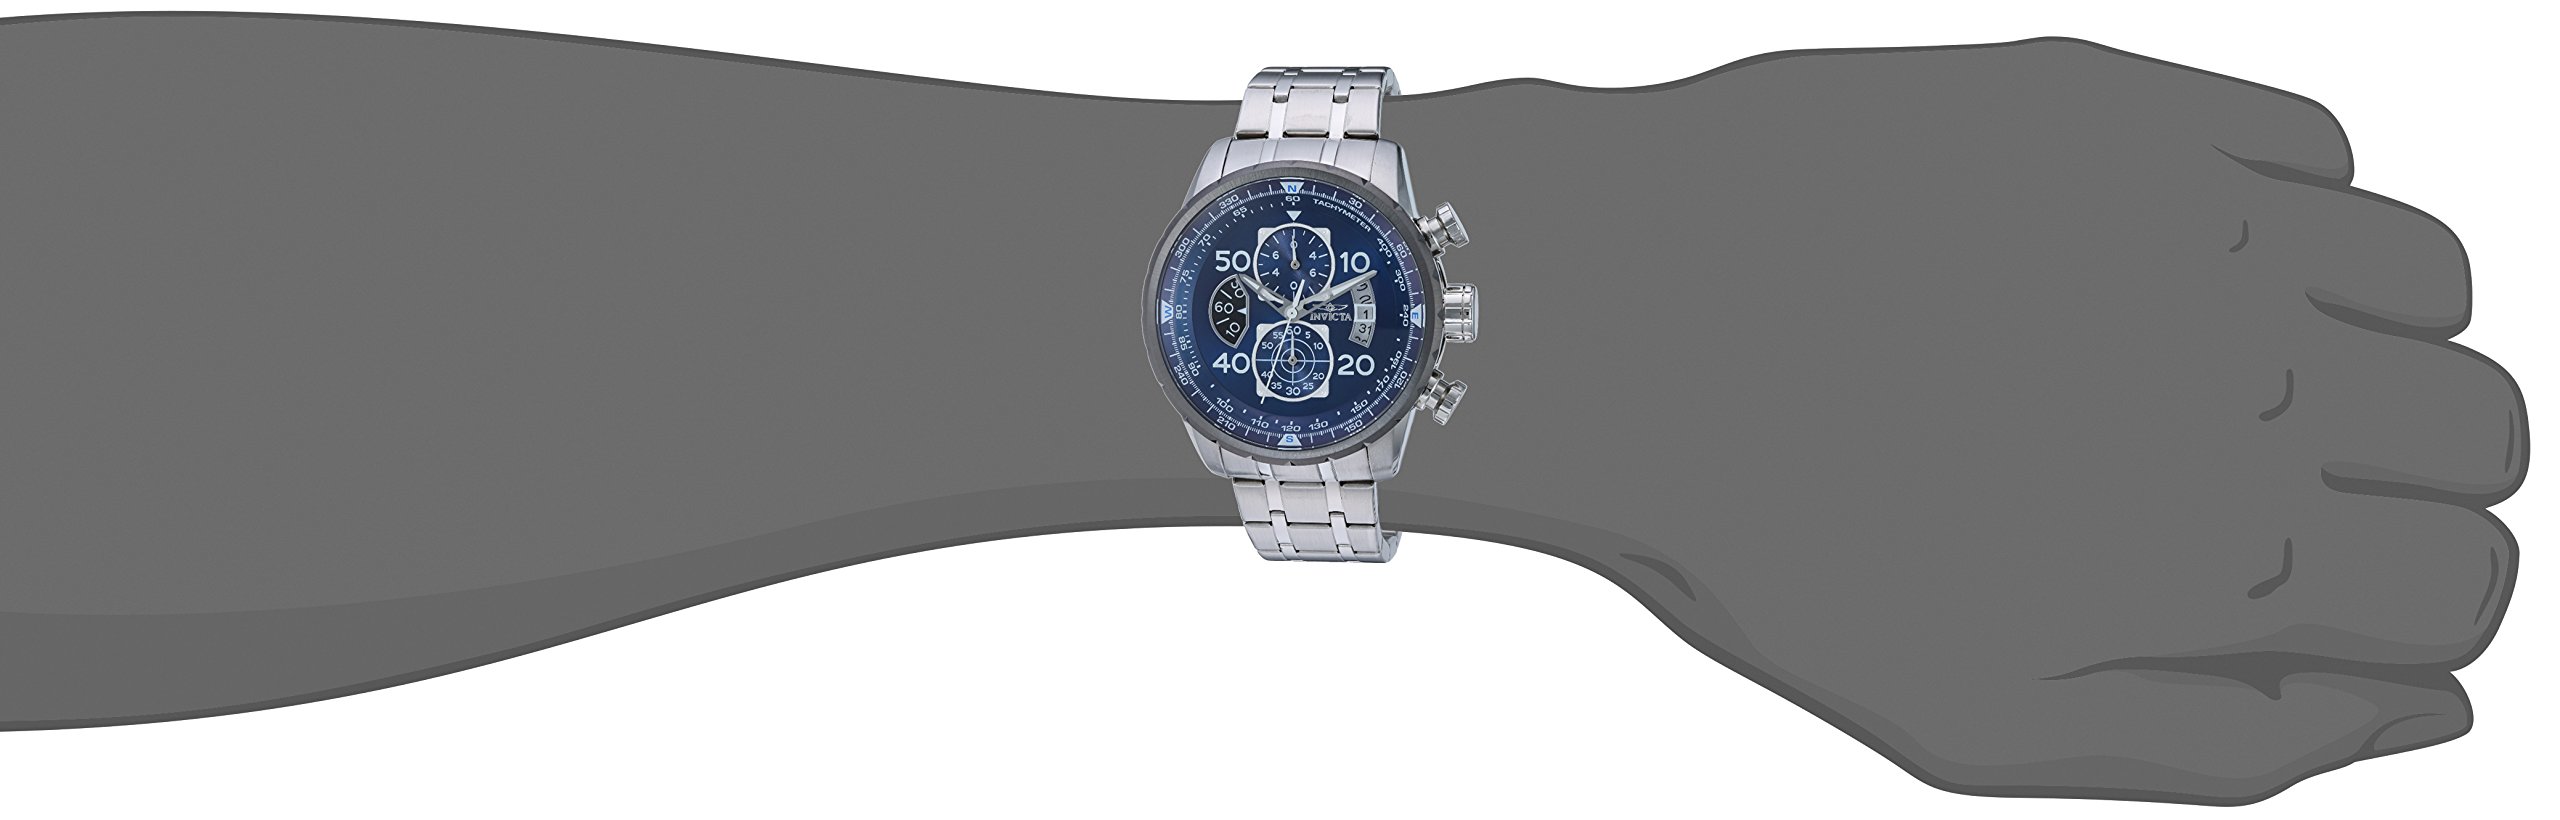 Invicta Men's 22970 Aviator Analog Display Quartz Silver Watch